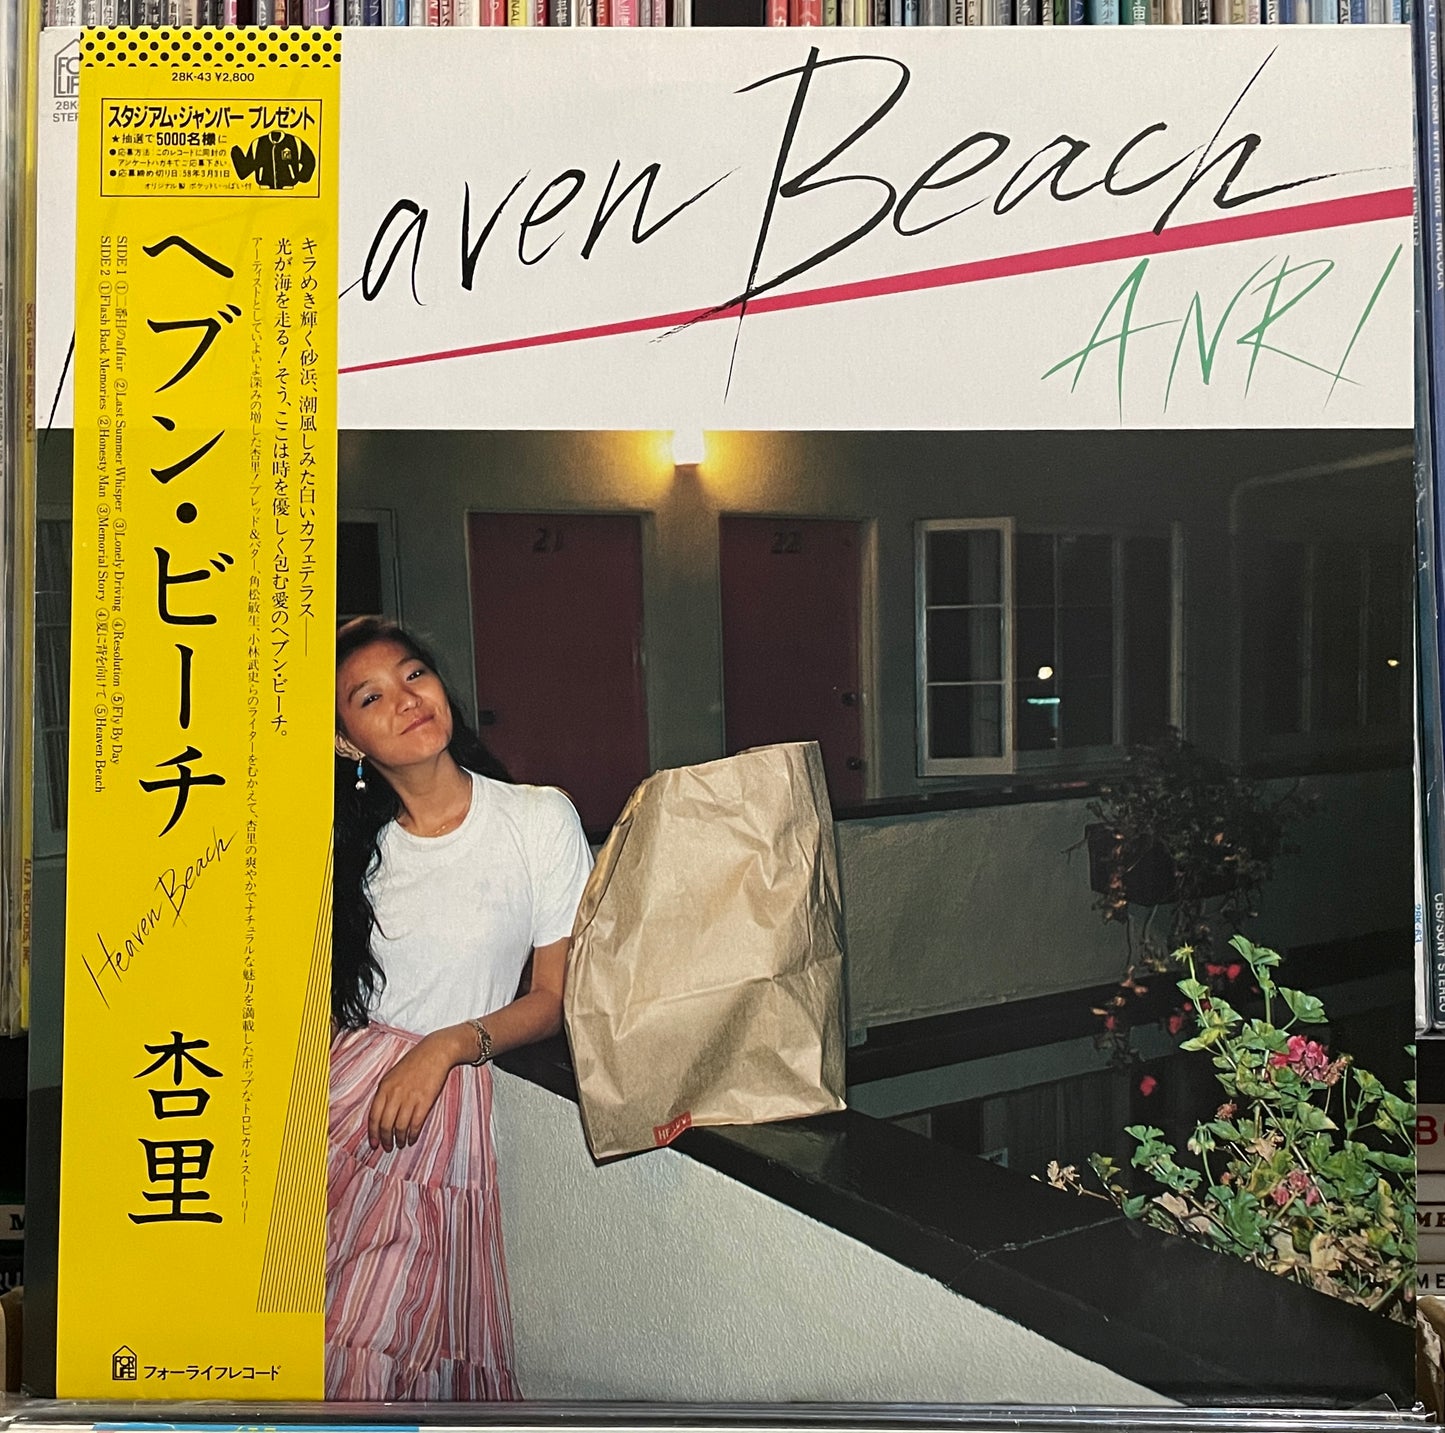 Anri “Heaven Beach” (1982)